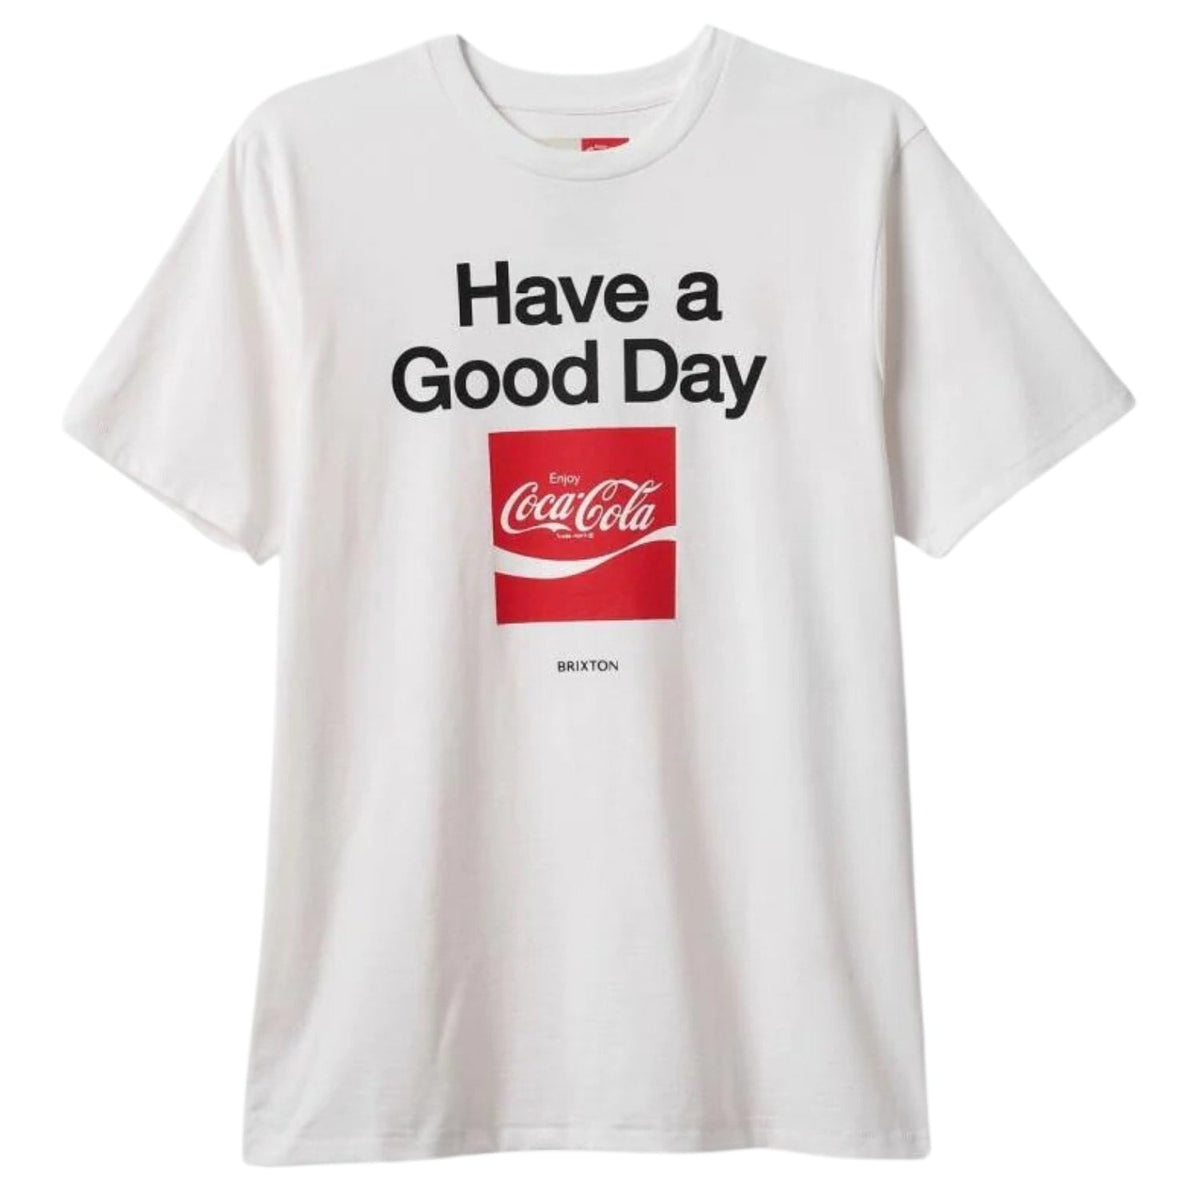 Brixton X Coca-Cola Good Day T-Shirt - White - Mens Graphic T-Shirt by Brixton